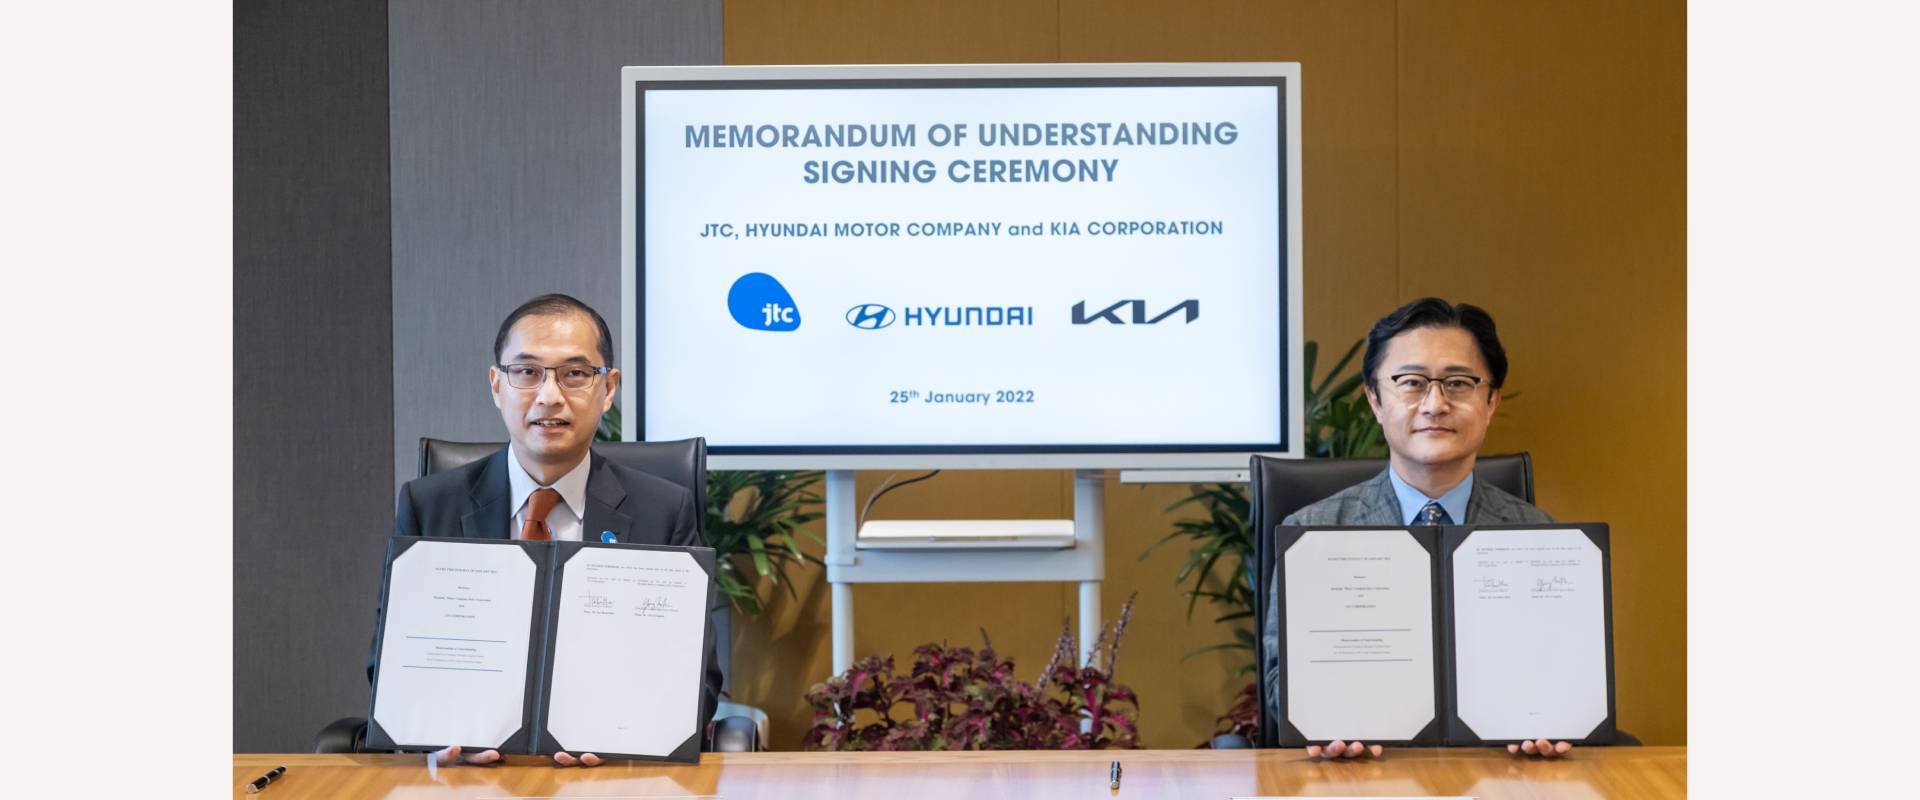 Hyundai Motor Group and JTC made MOU